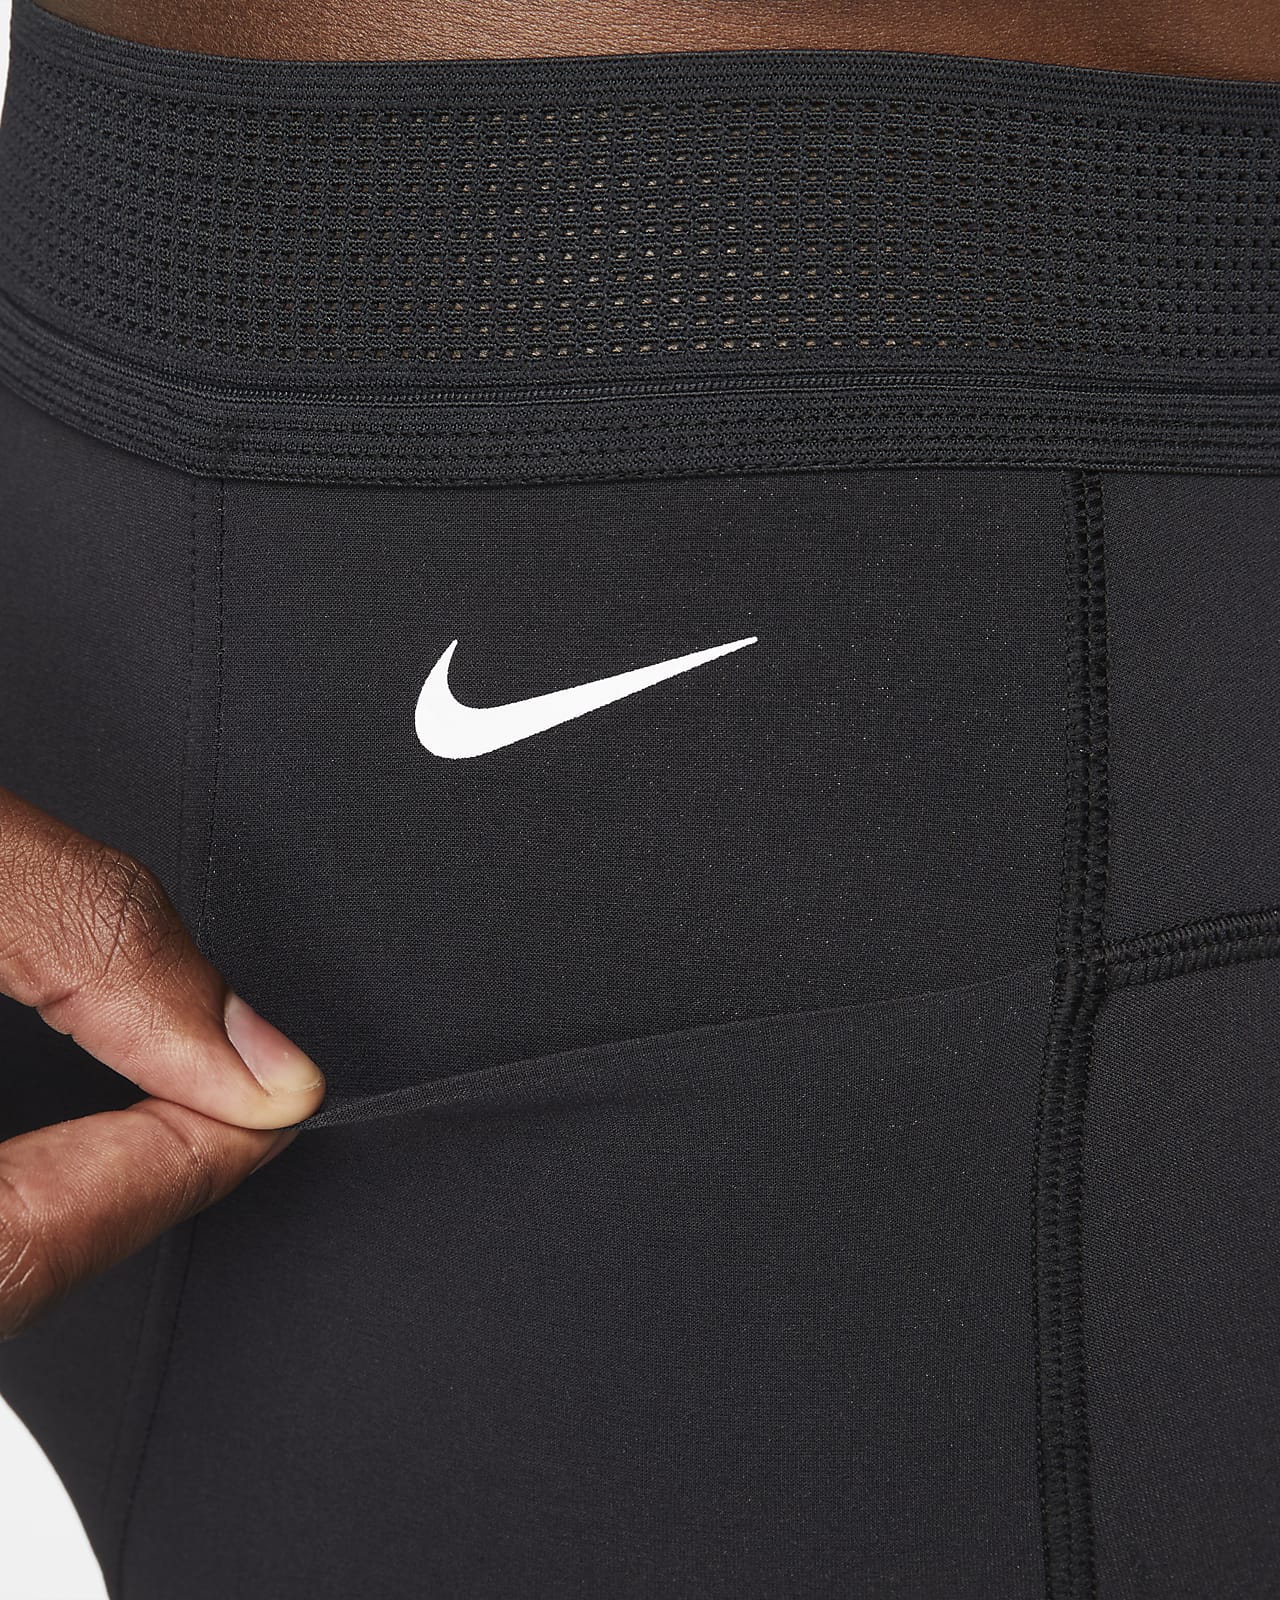 NEW Men's Nike Pro Full Length Dri-FIT Training Tights Grey DD1913